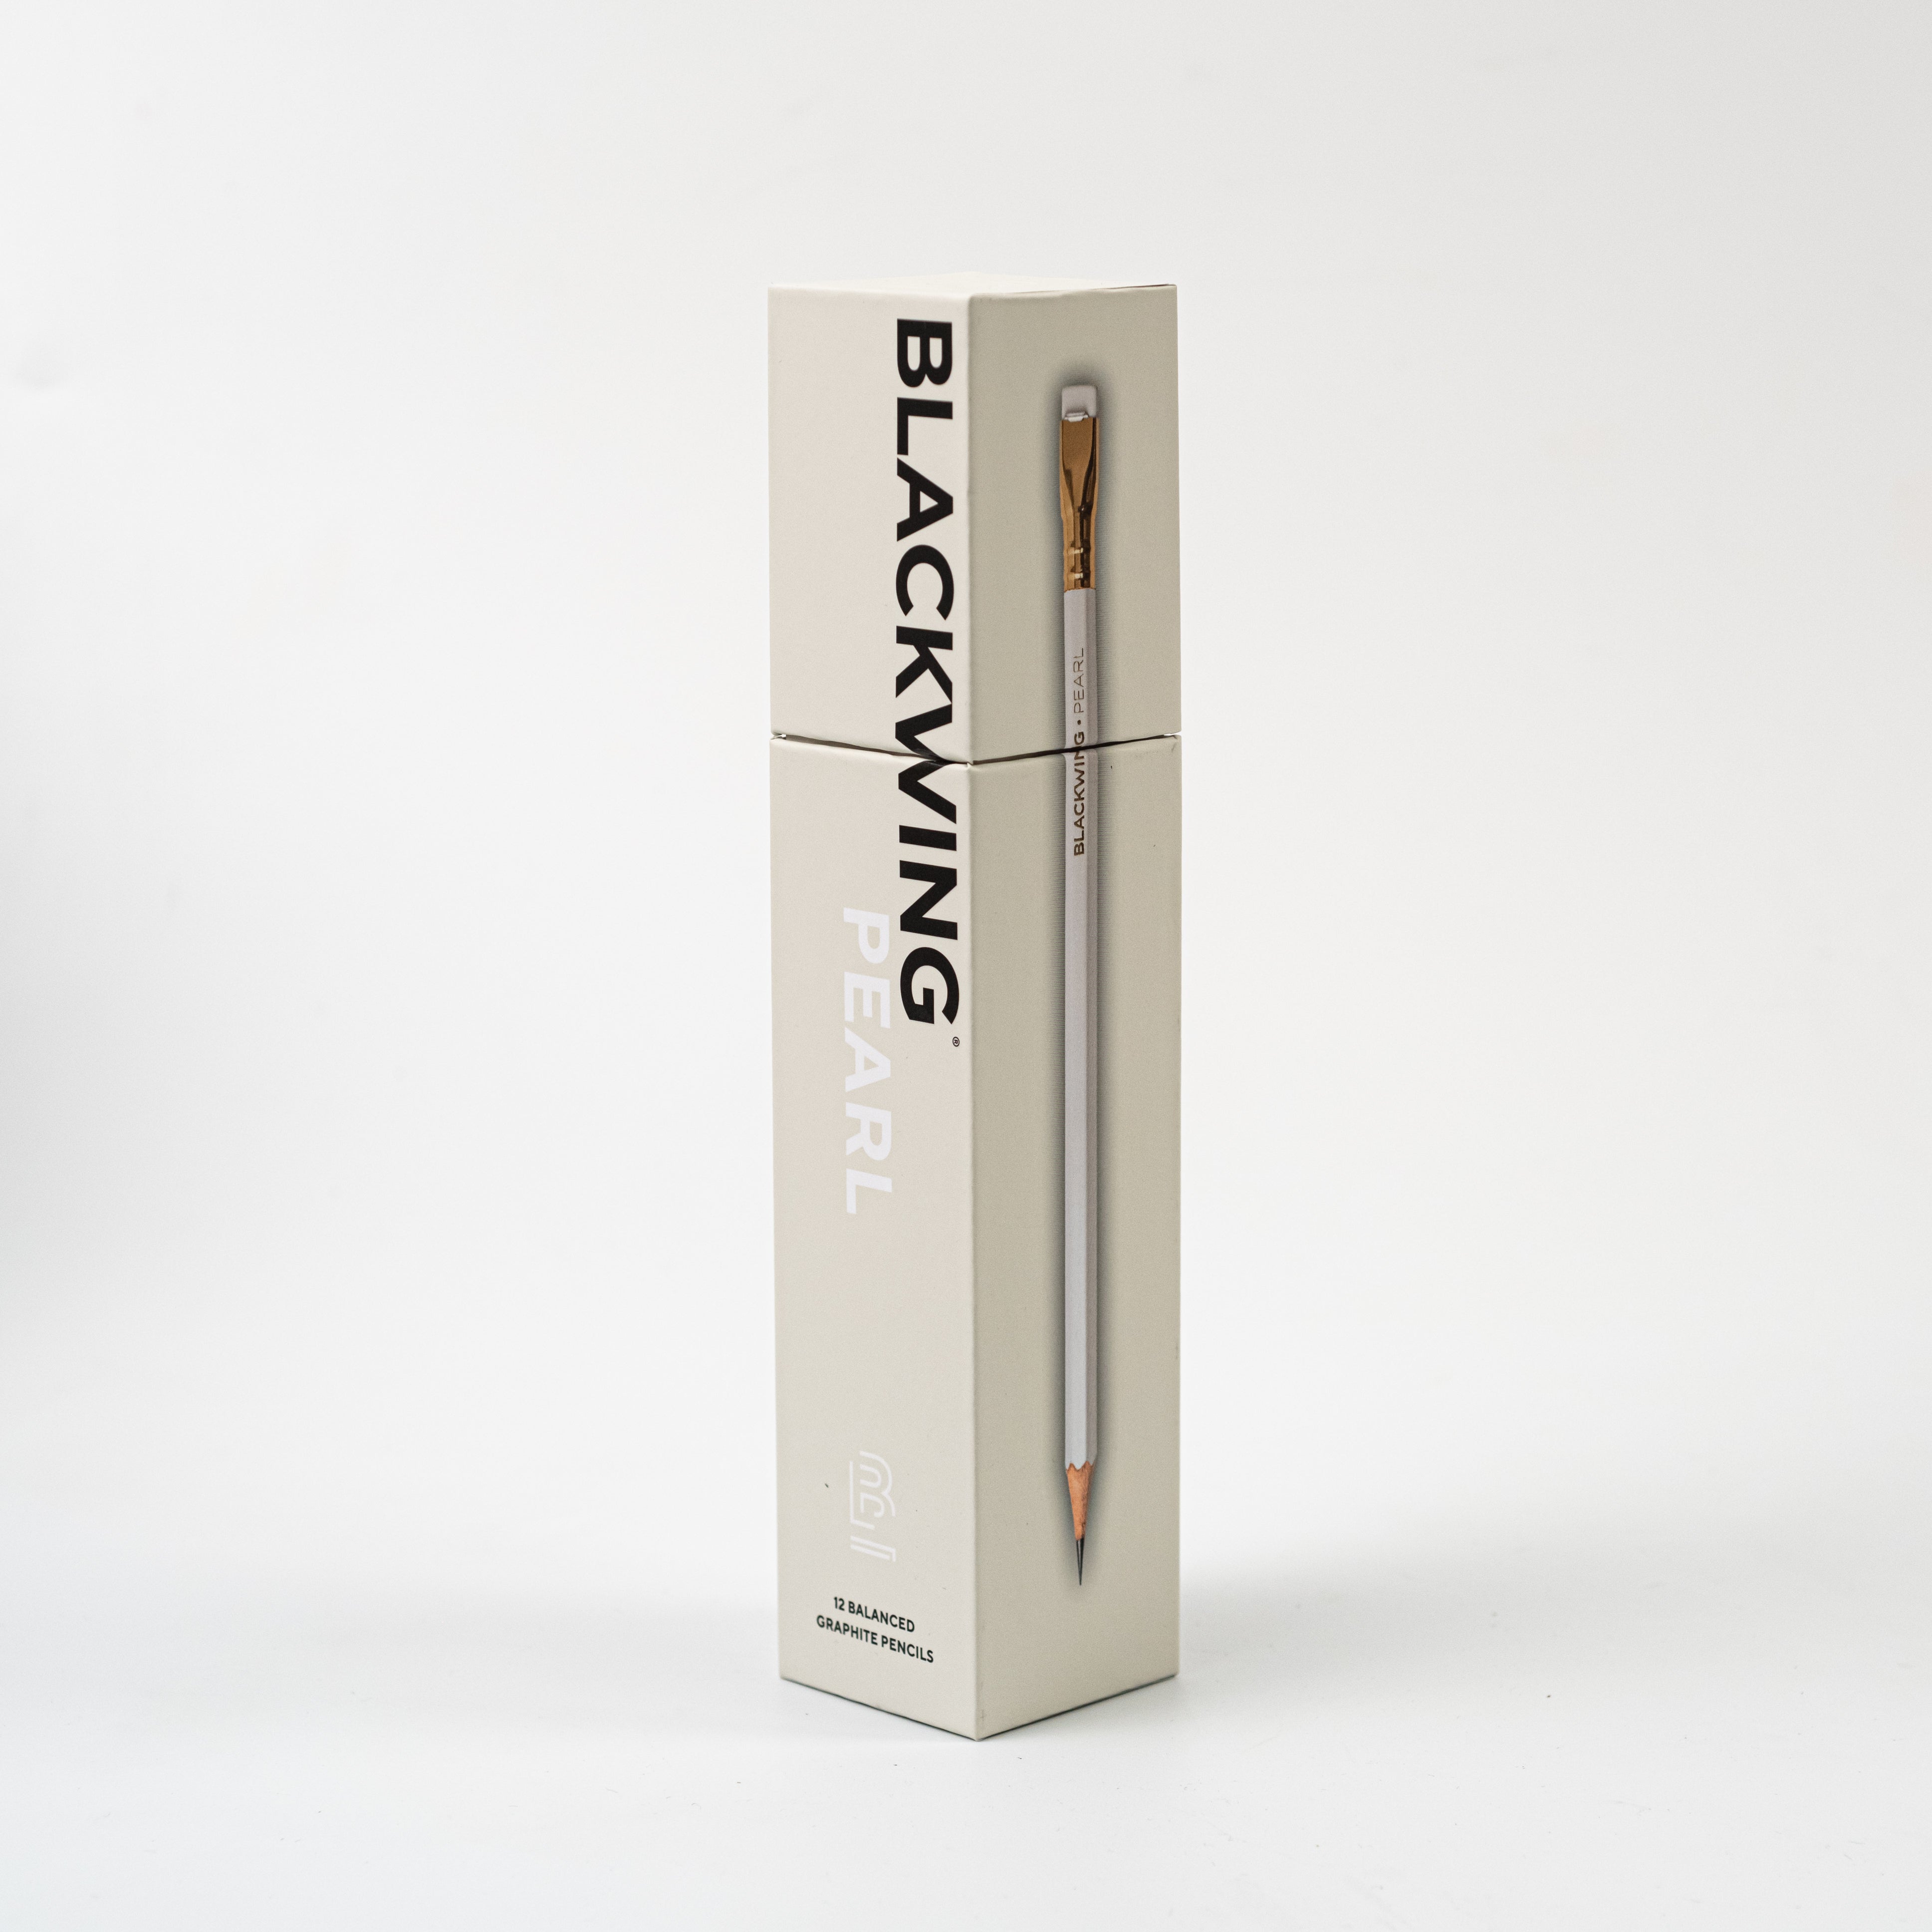 Blackwing Pearl (set of 12) - Box